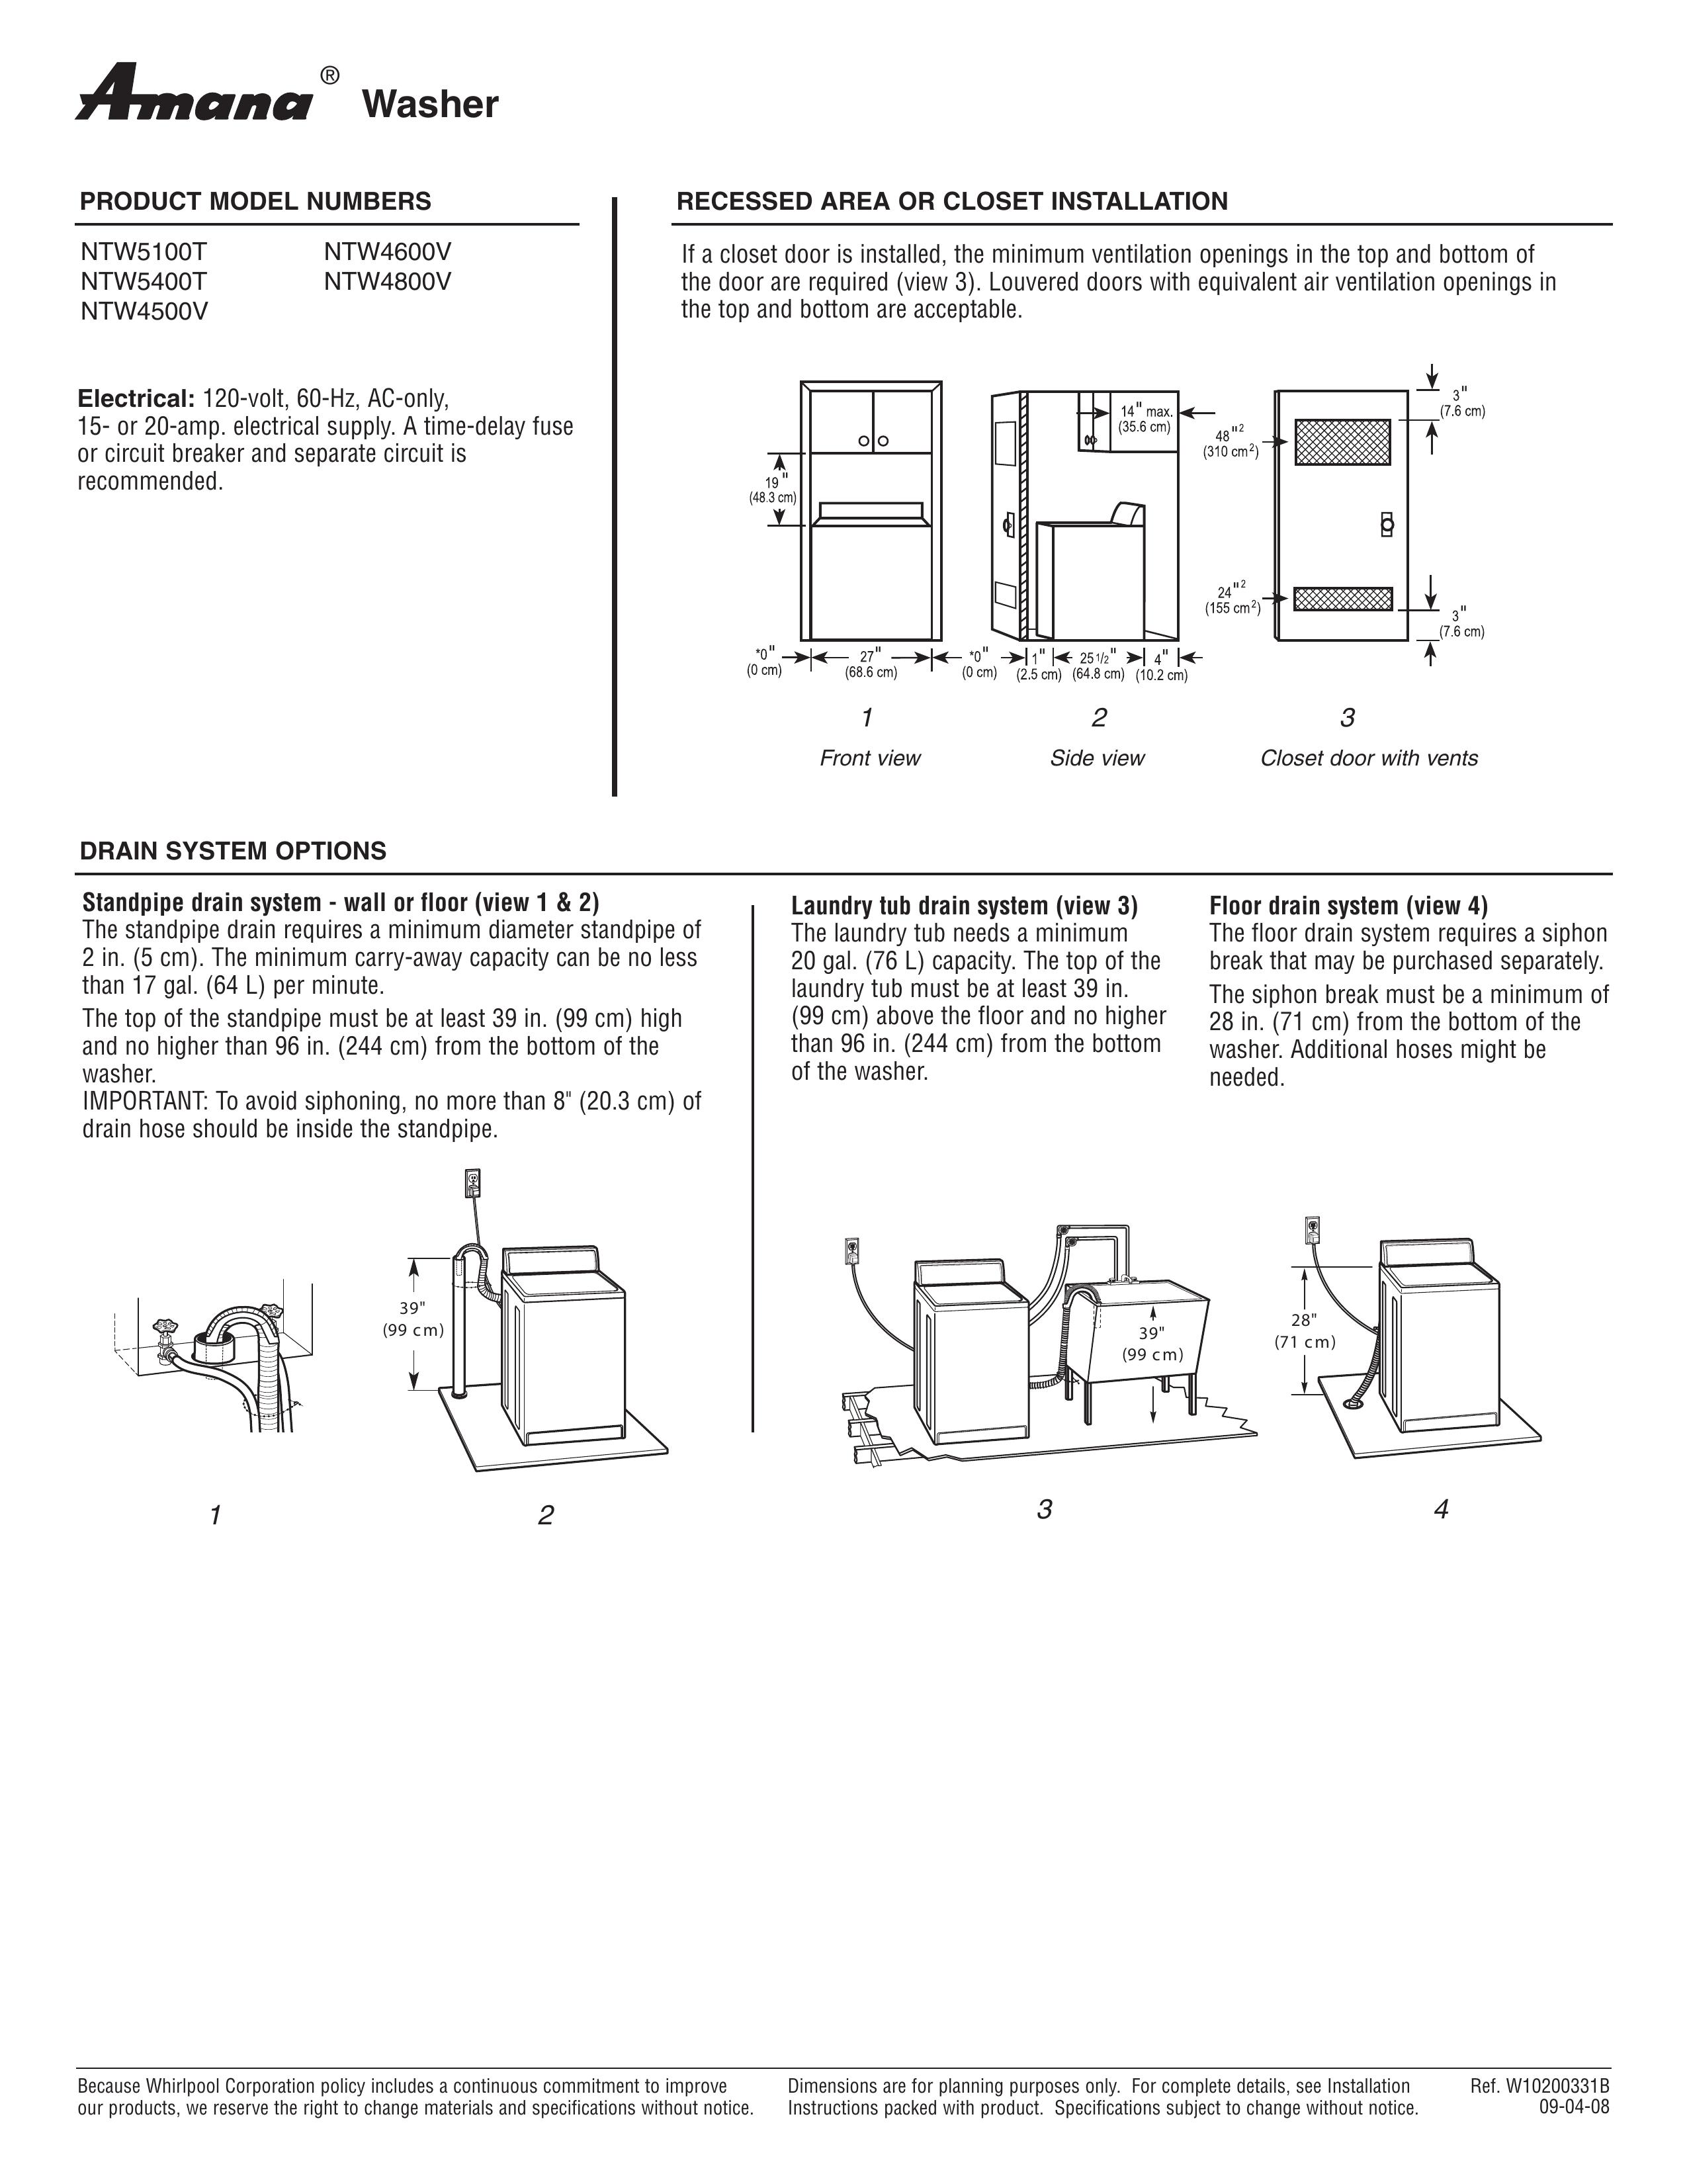 Amana NTW5100T Washer User Manual